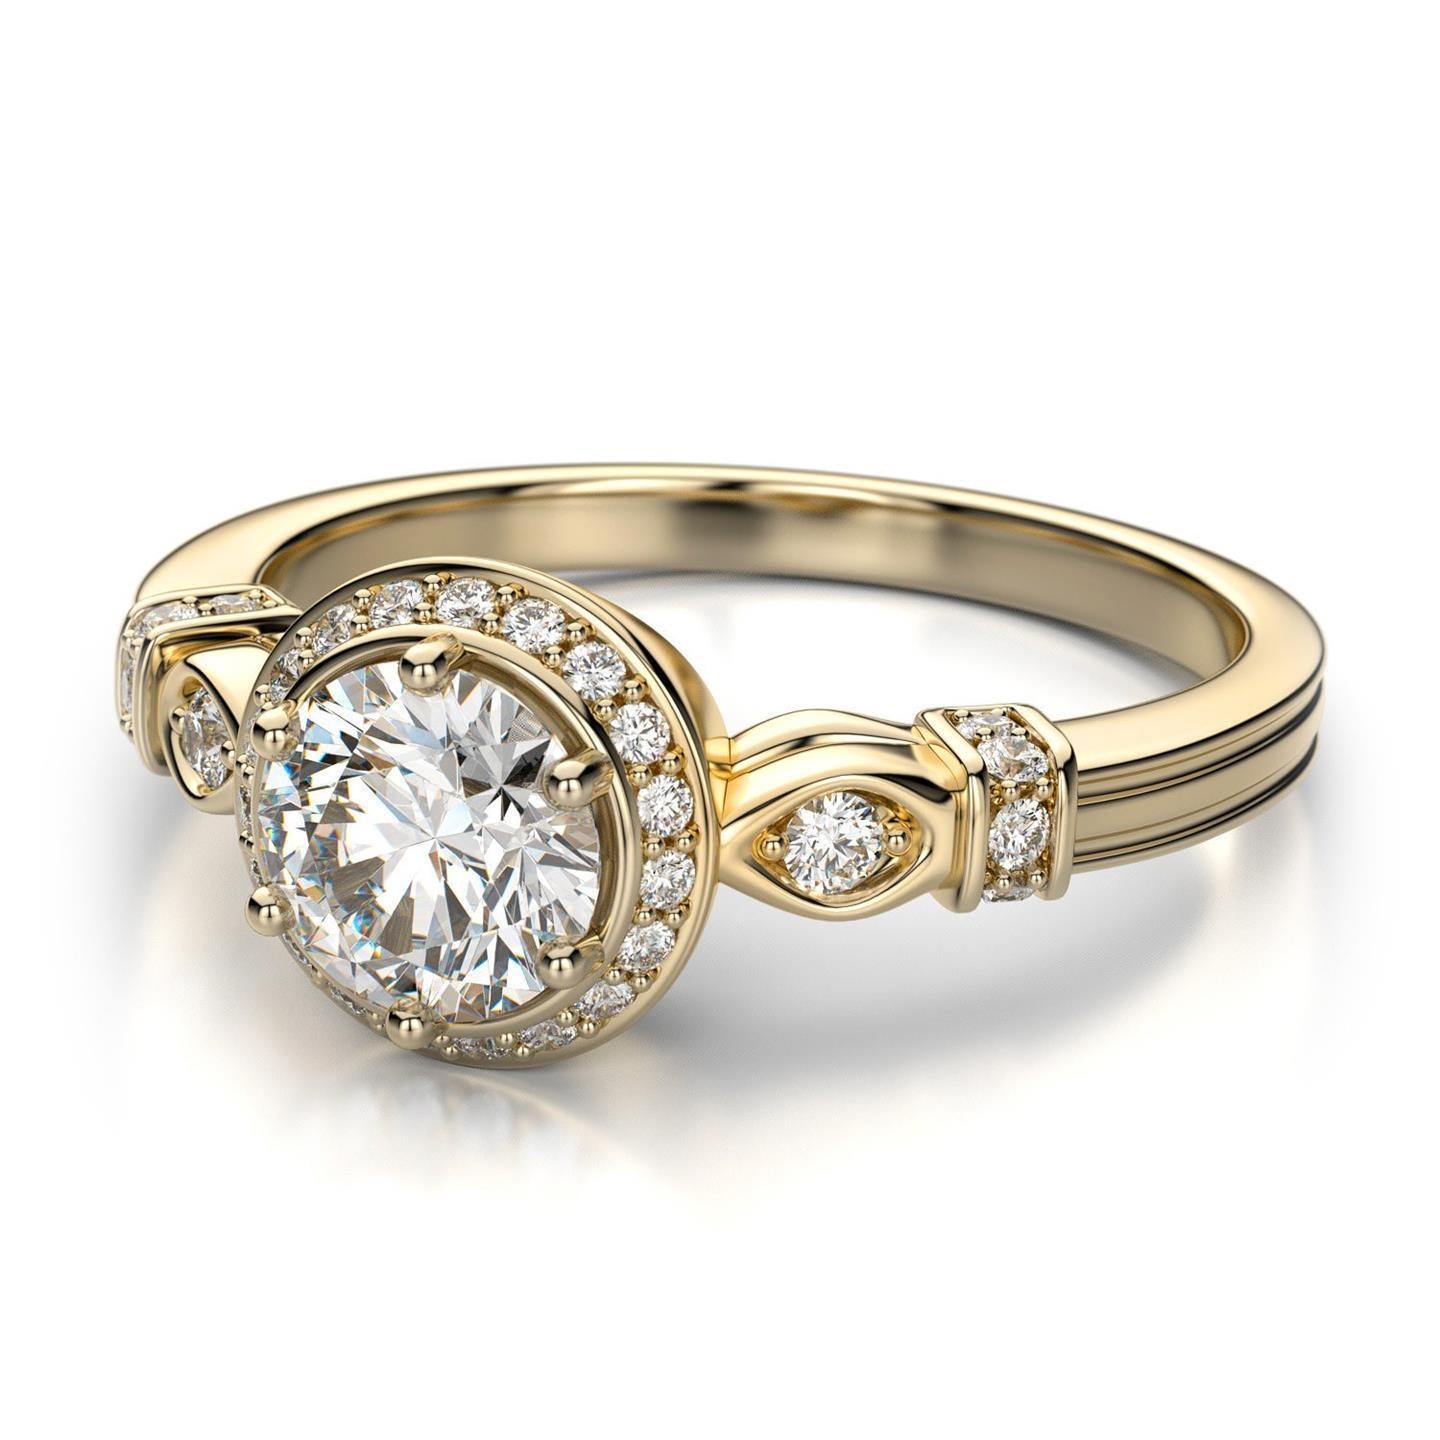 Yellow gold 14k 2.70 carats diamonds Antique style Wedding ring new